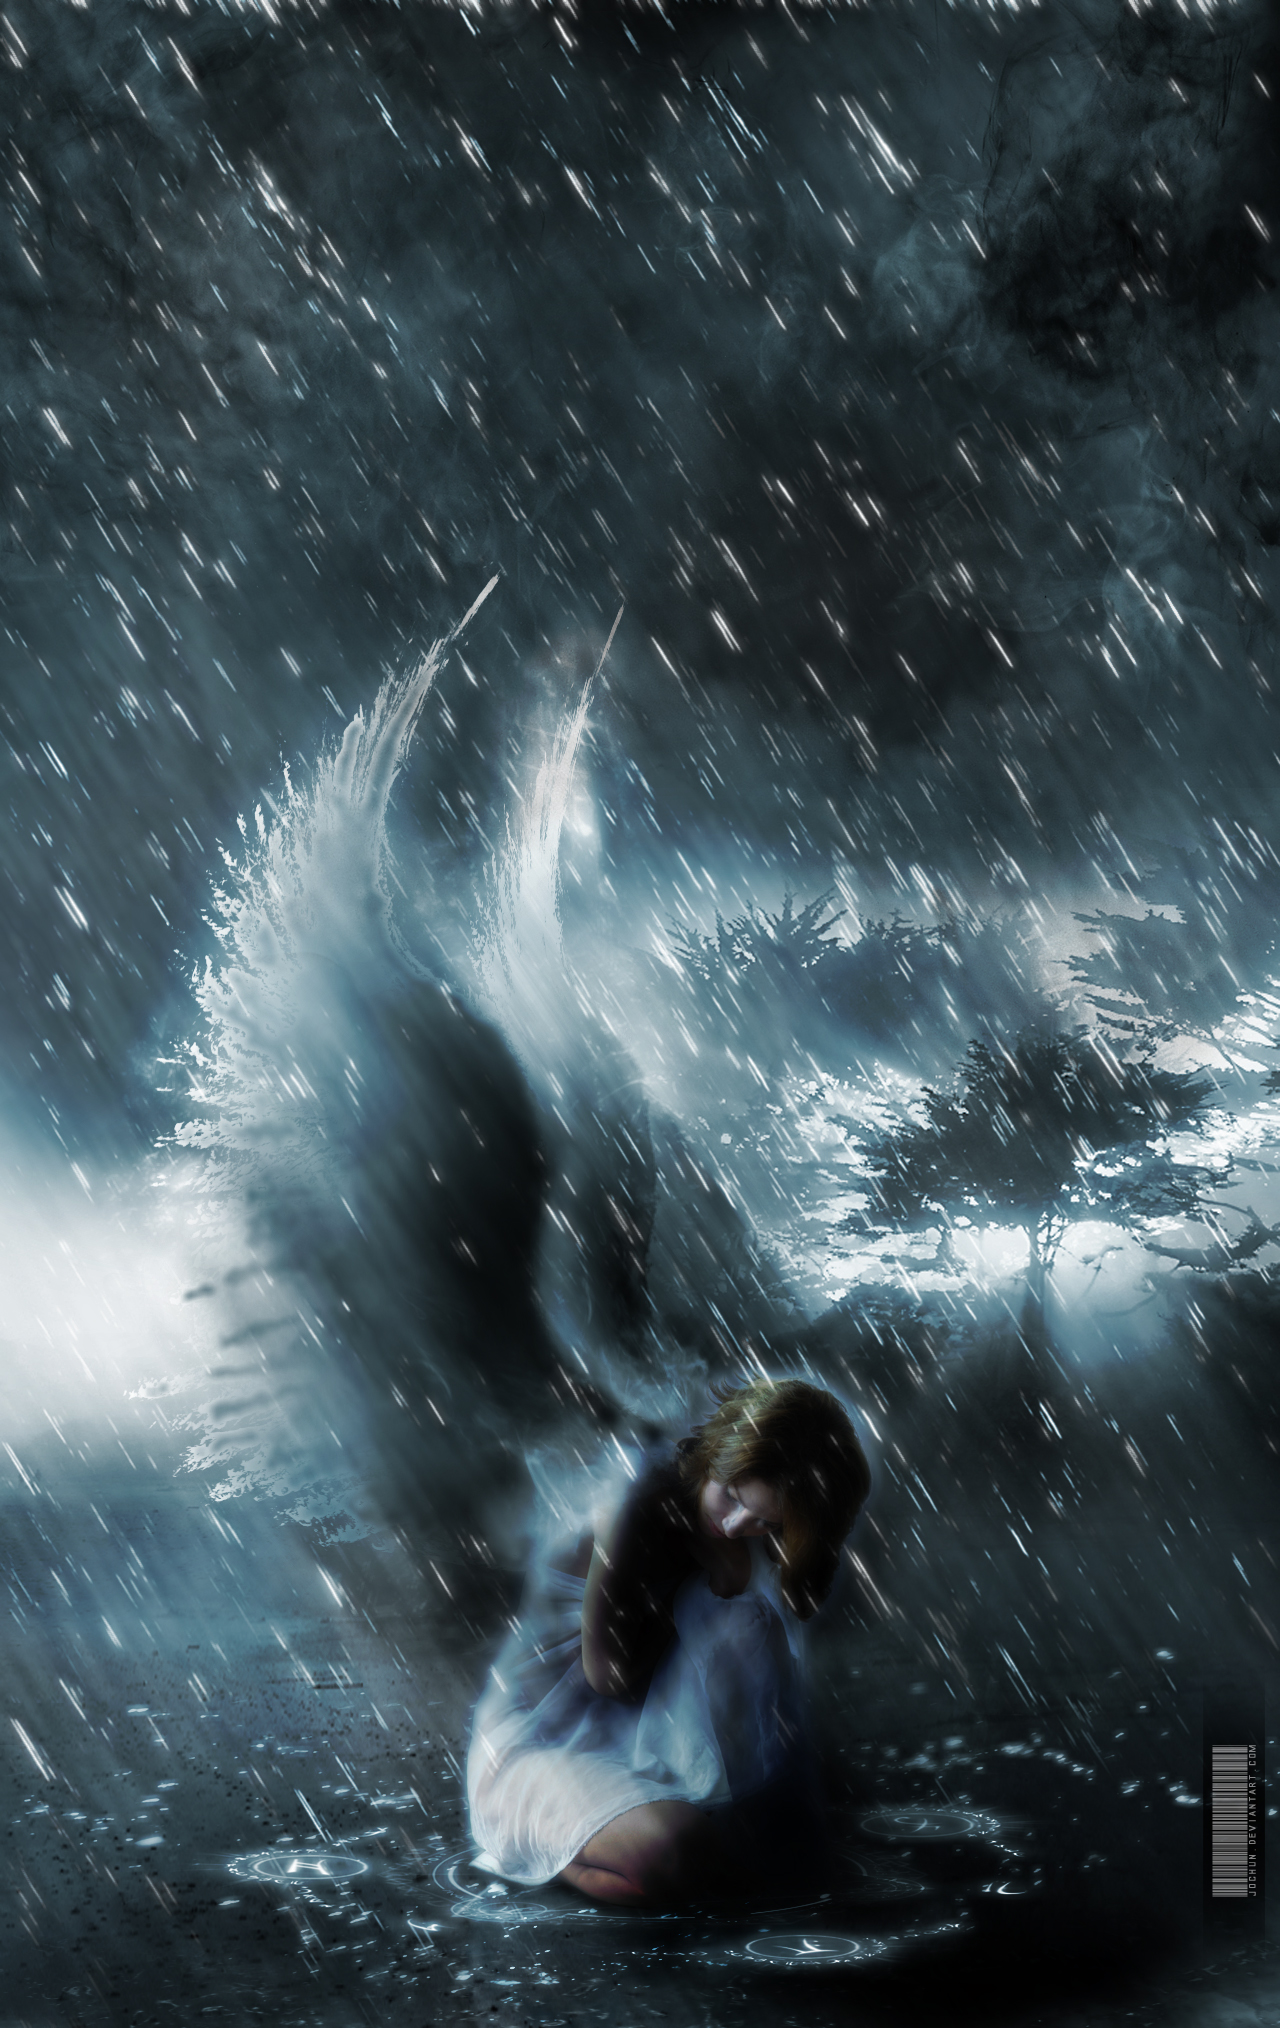 Angel_and_the_rain_by_jochun.jpg